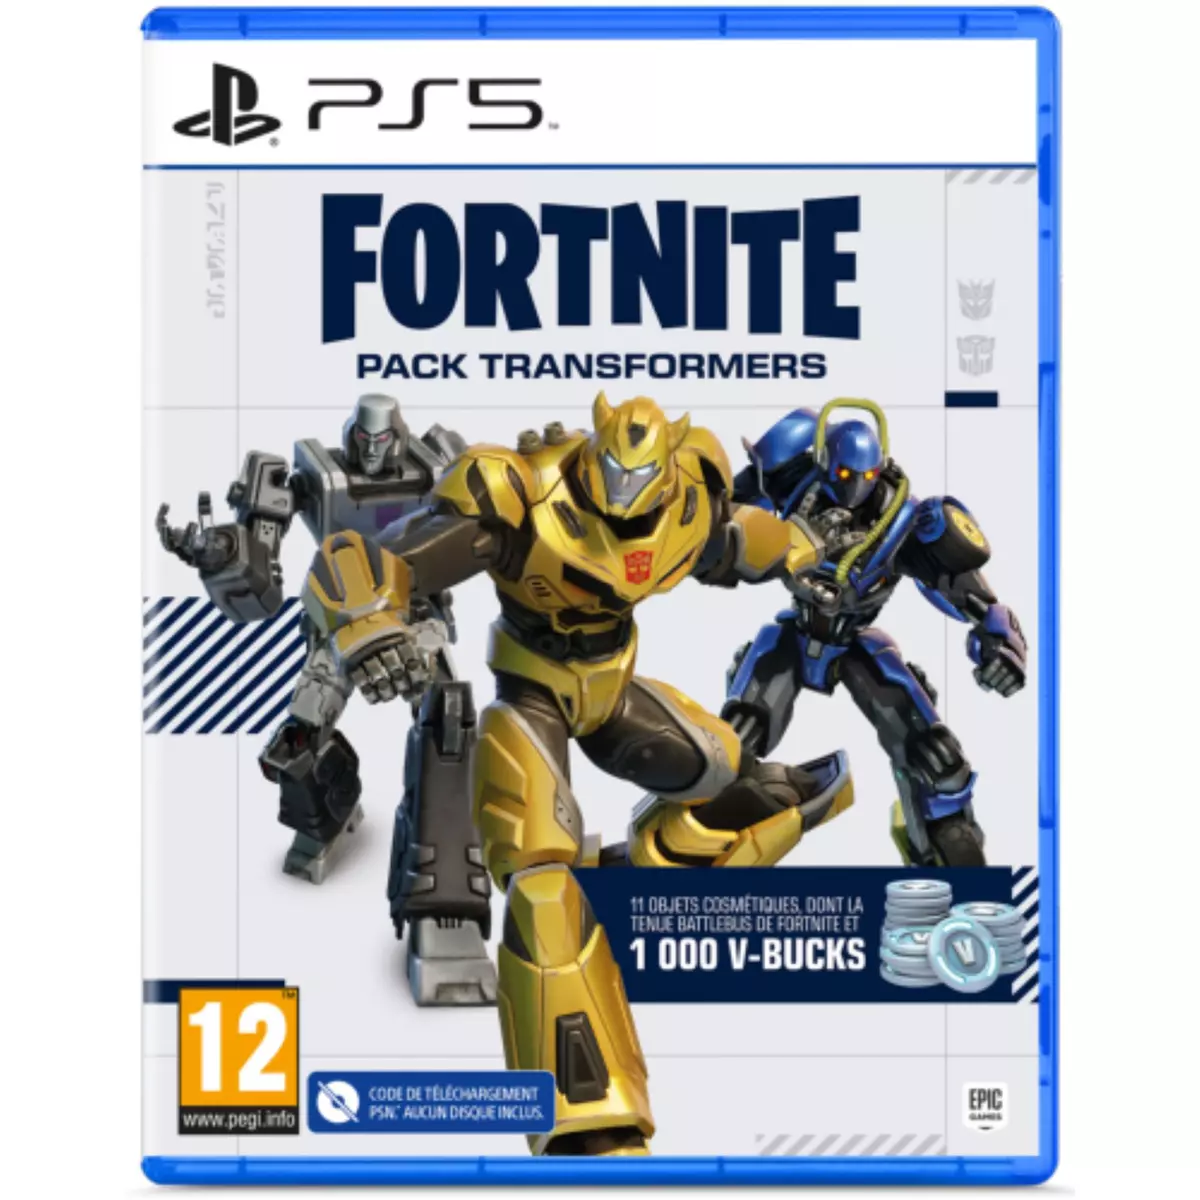 Fortnite - Pack Transformers PS5